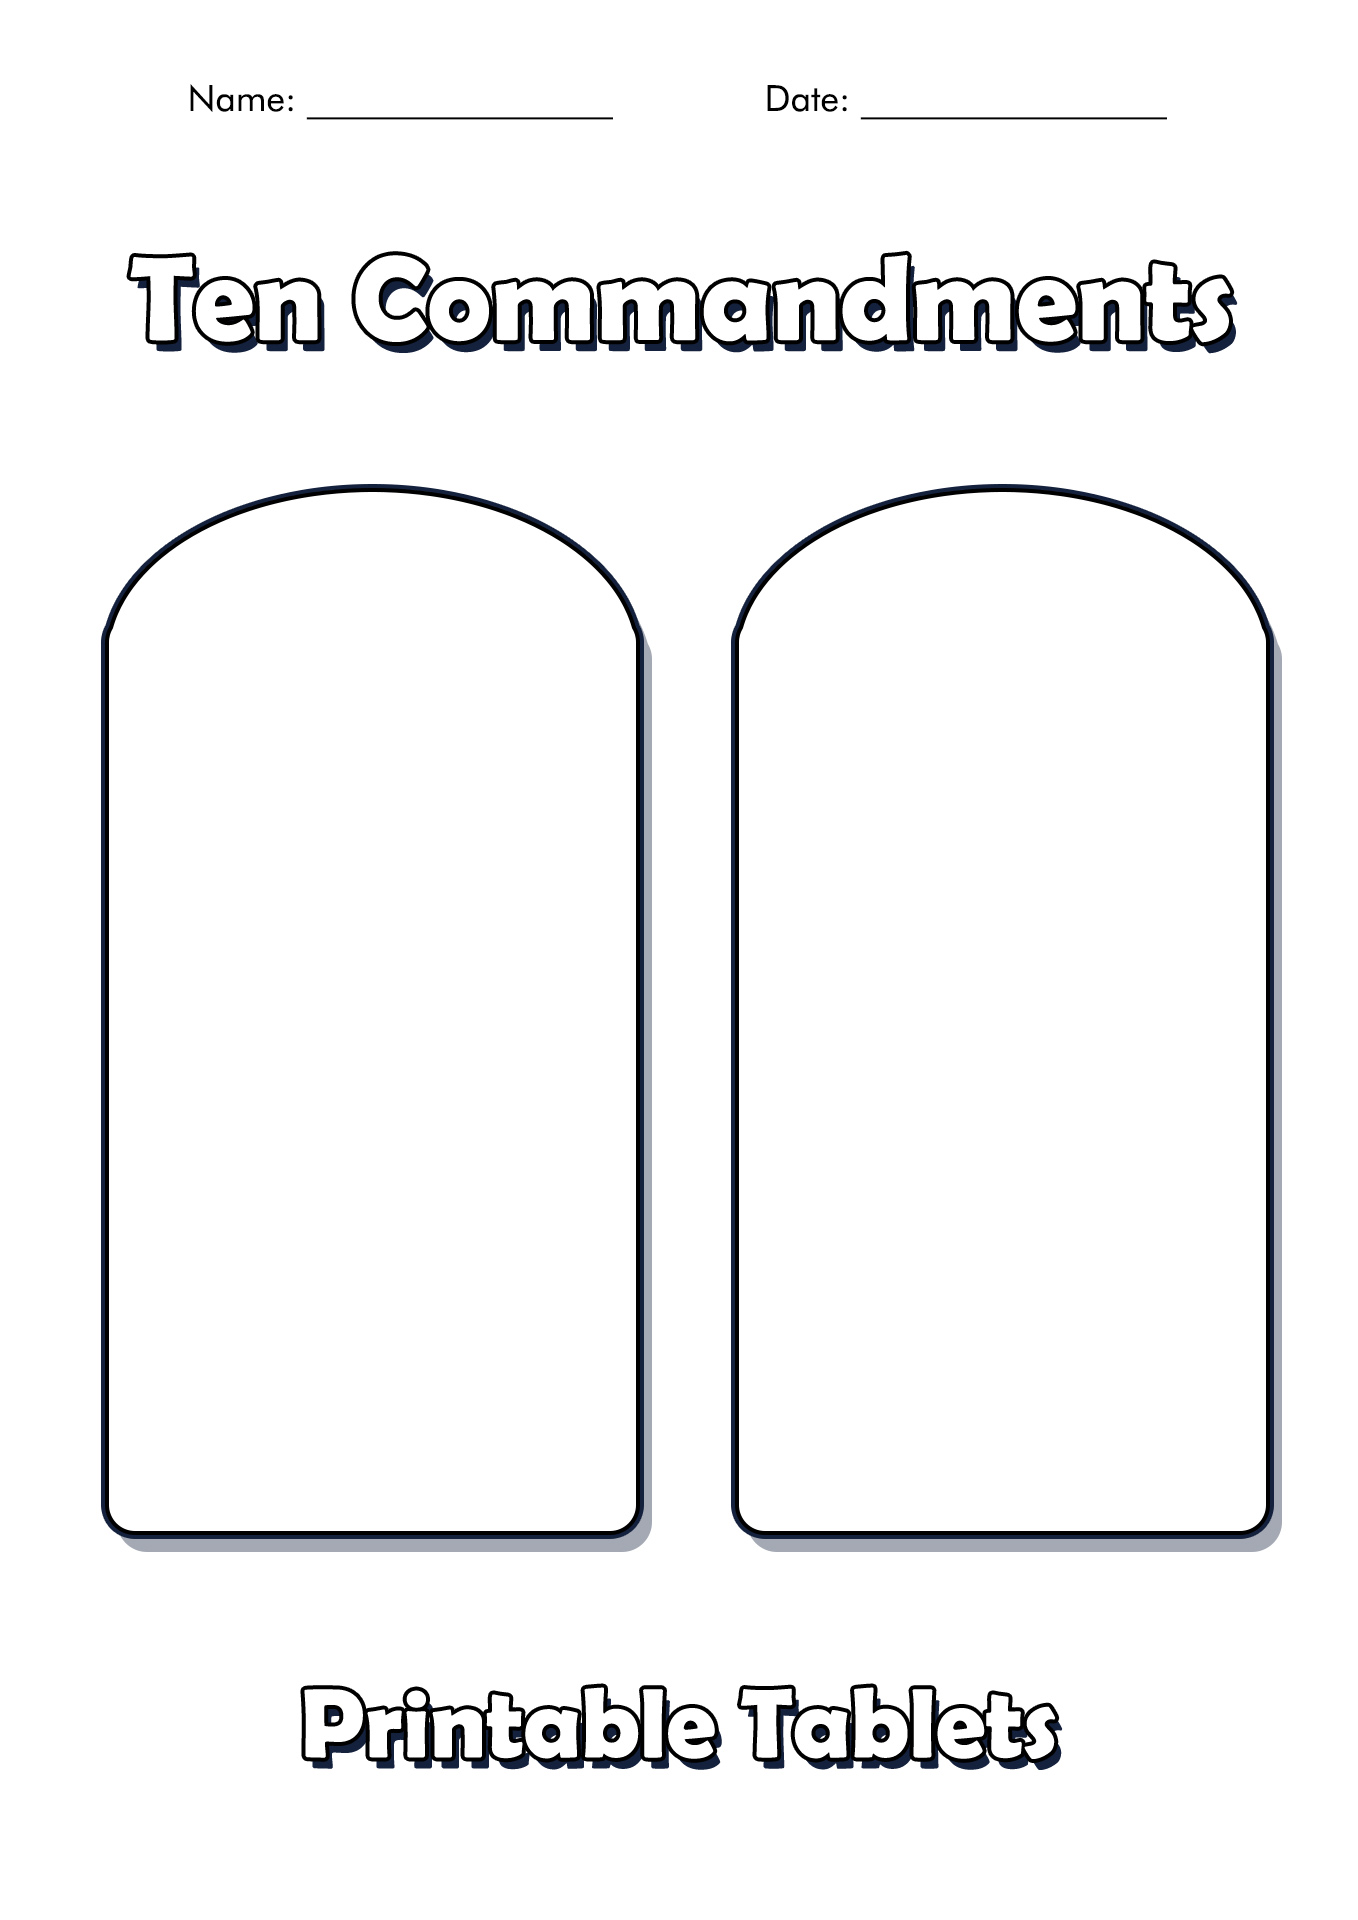 Free Printable Ten Commandments Tablets